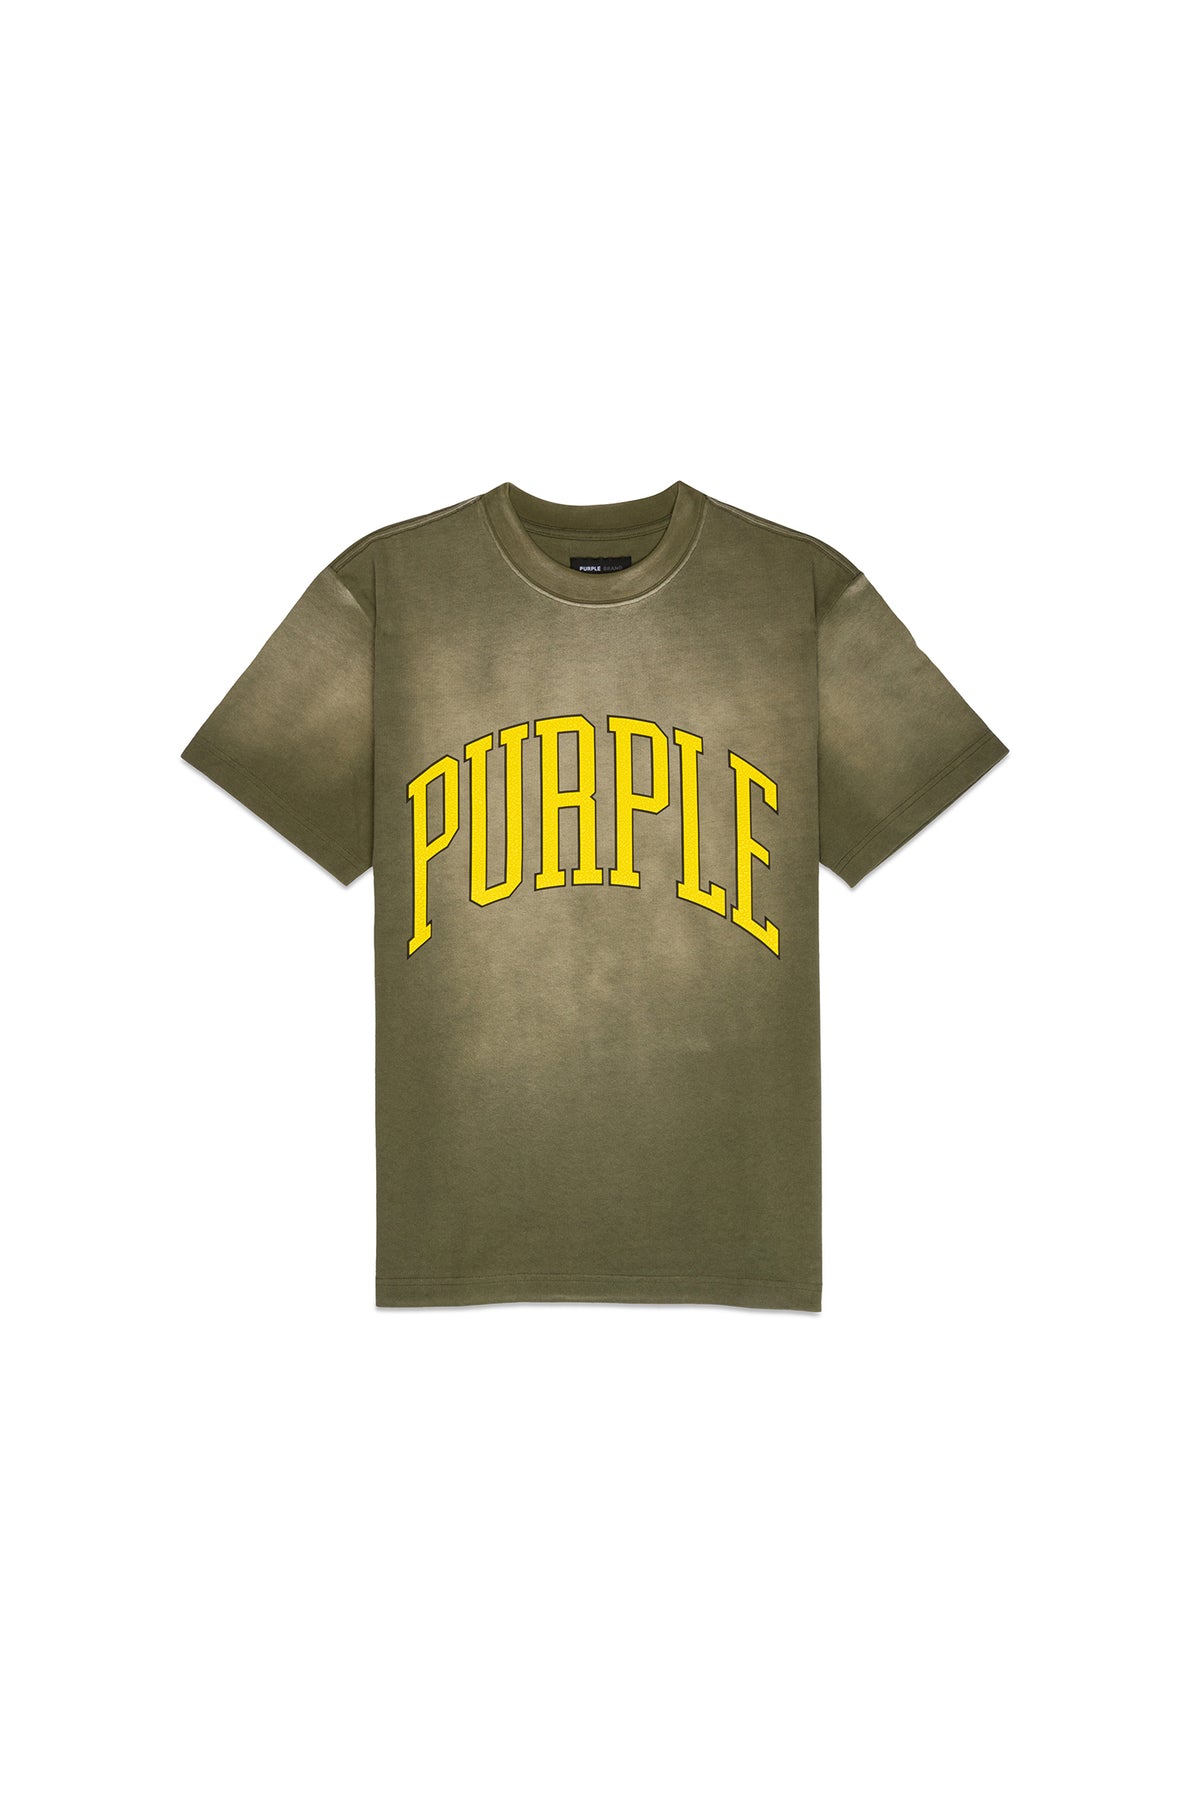 PURPLE BRAND Collegiate T-Shirt (Green)